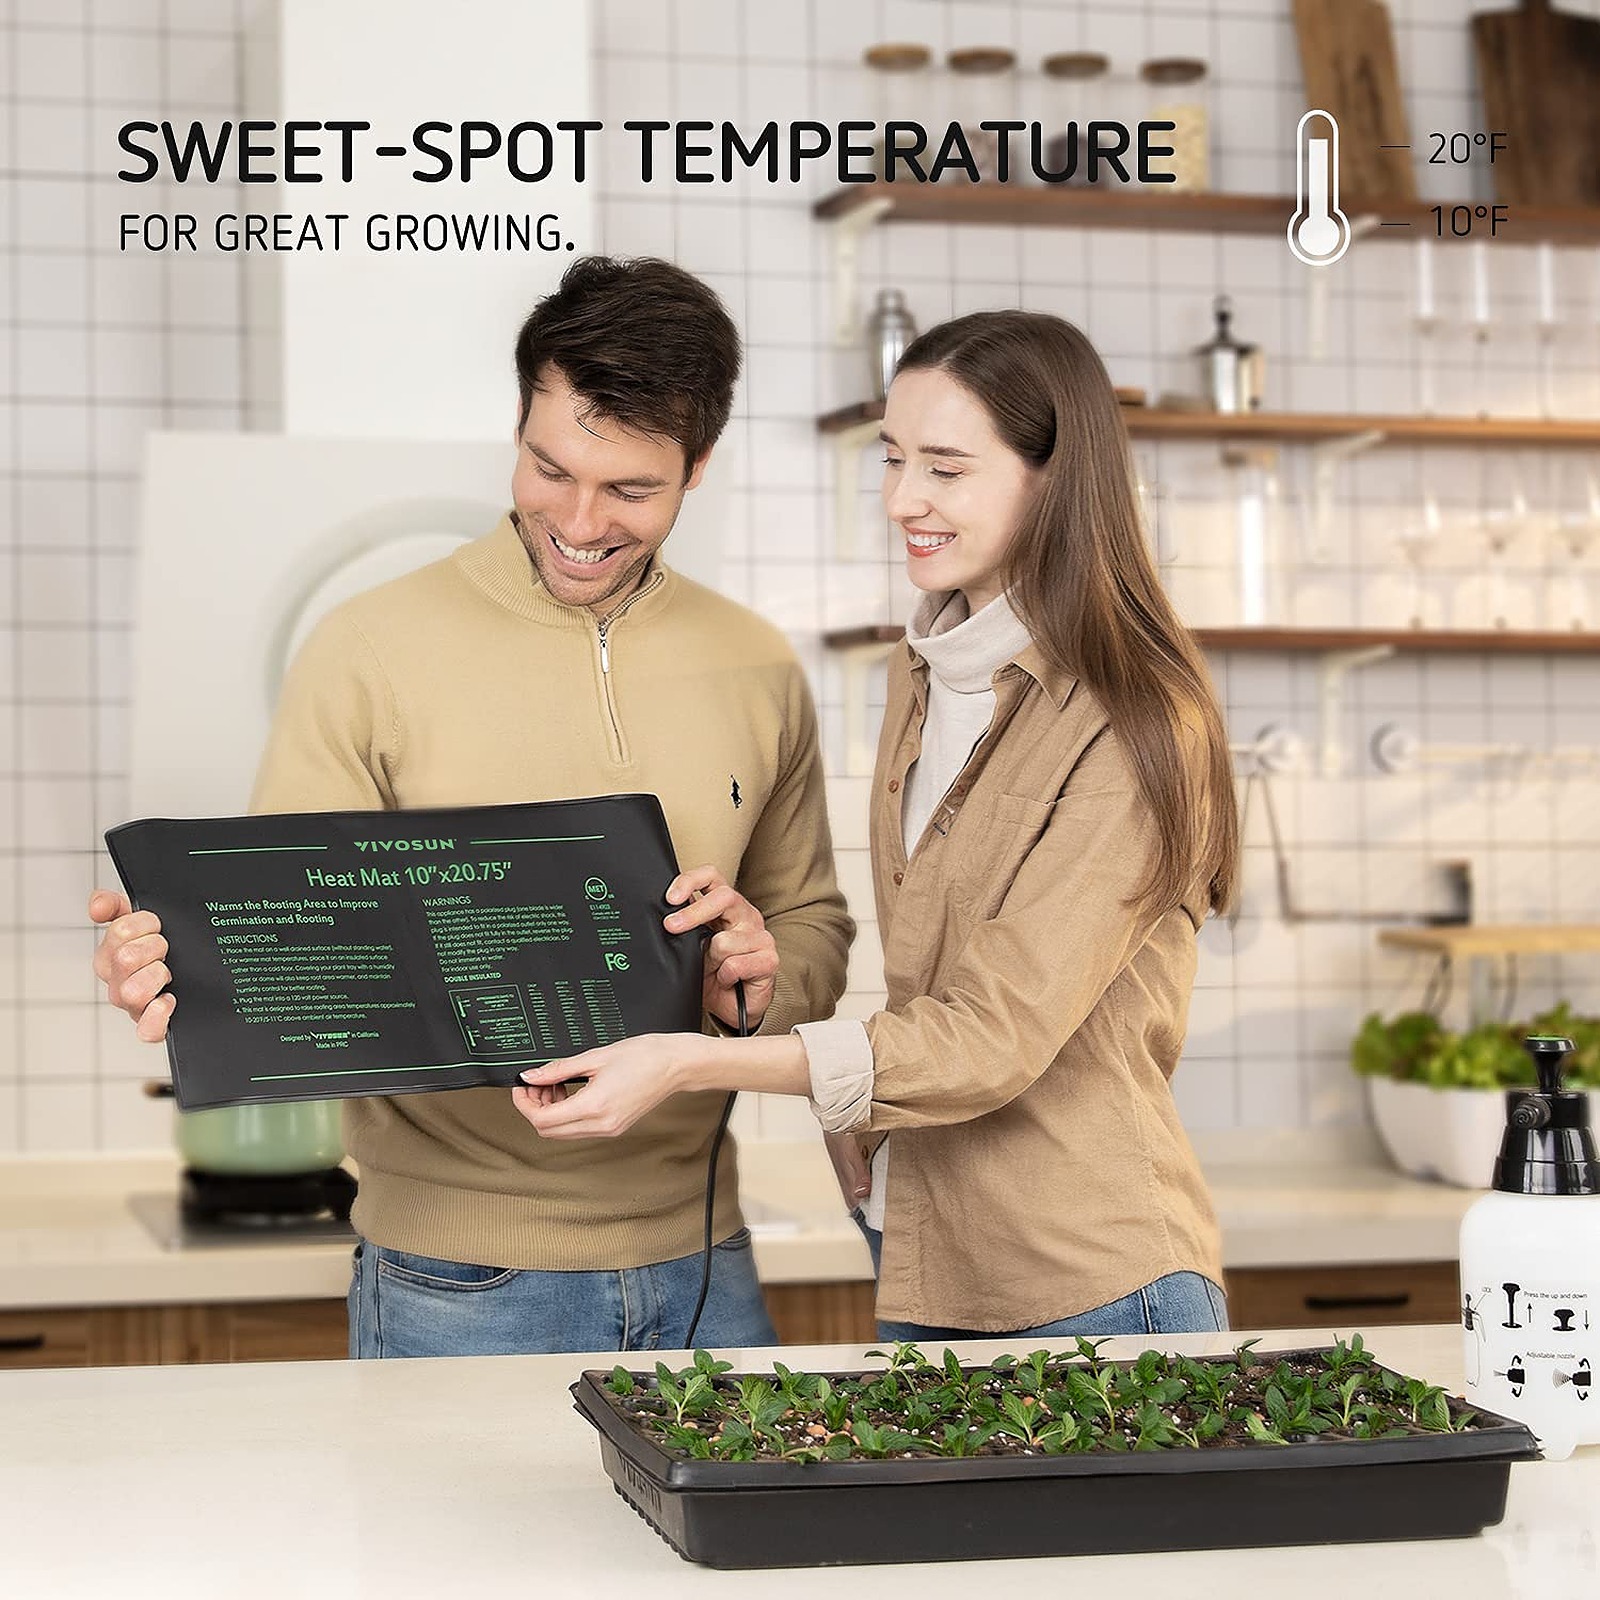 VIVOSUN 10x20.75 Seedling Heat Mat and Digital Thermostat Combo Set MET  Standard